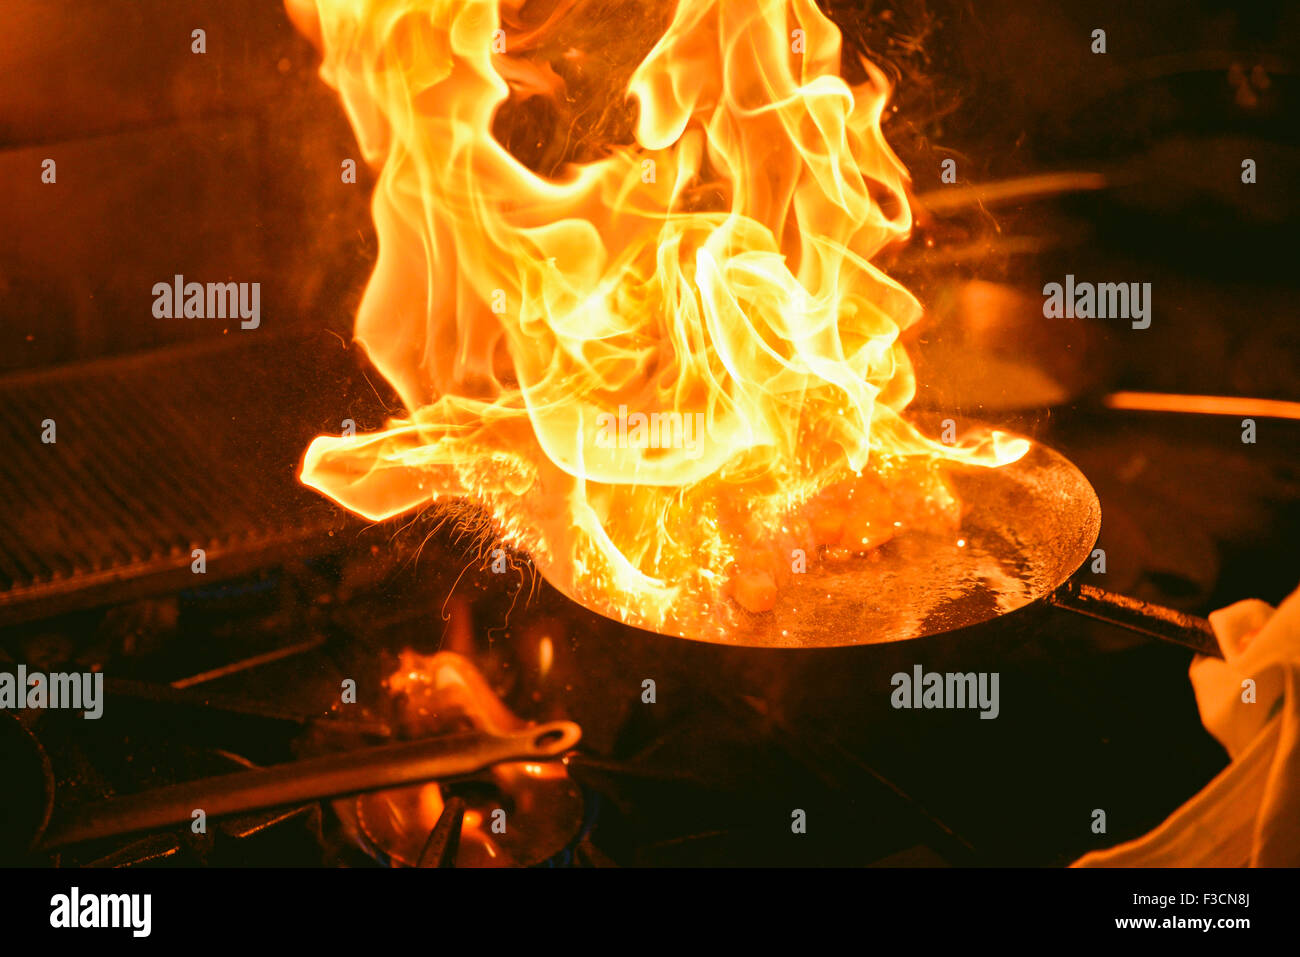 Flaming pan on stove Stock Photo